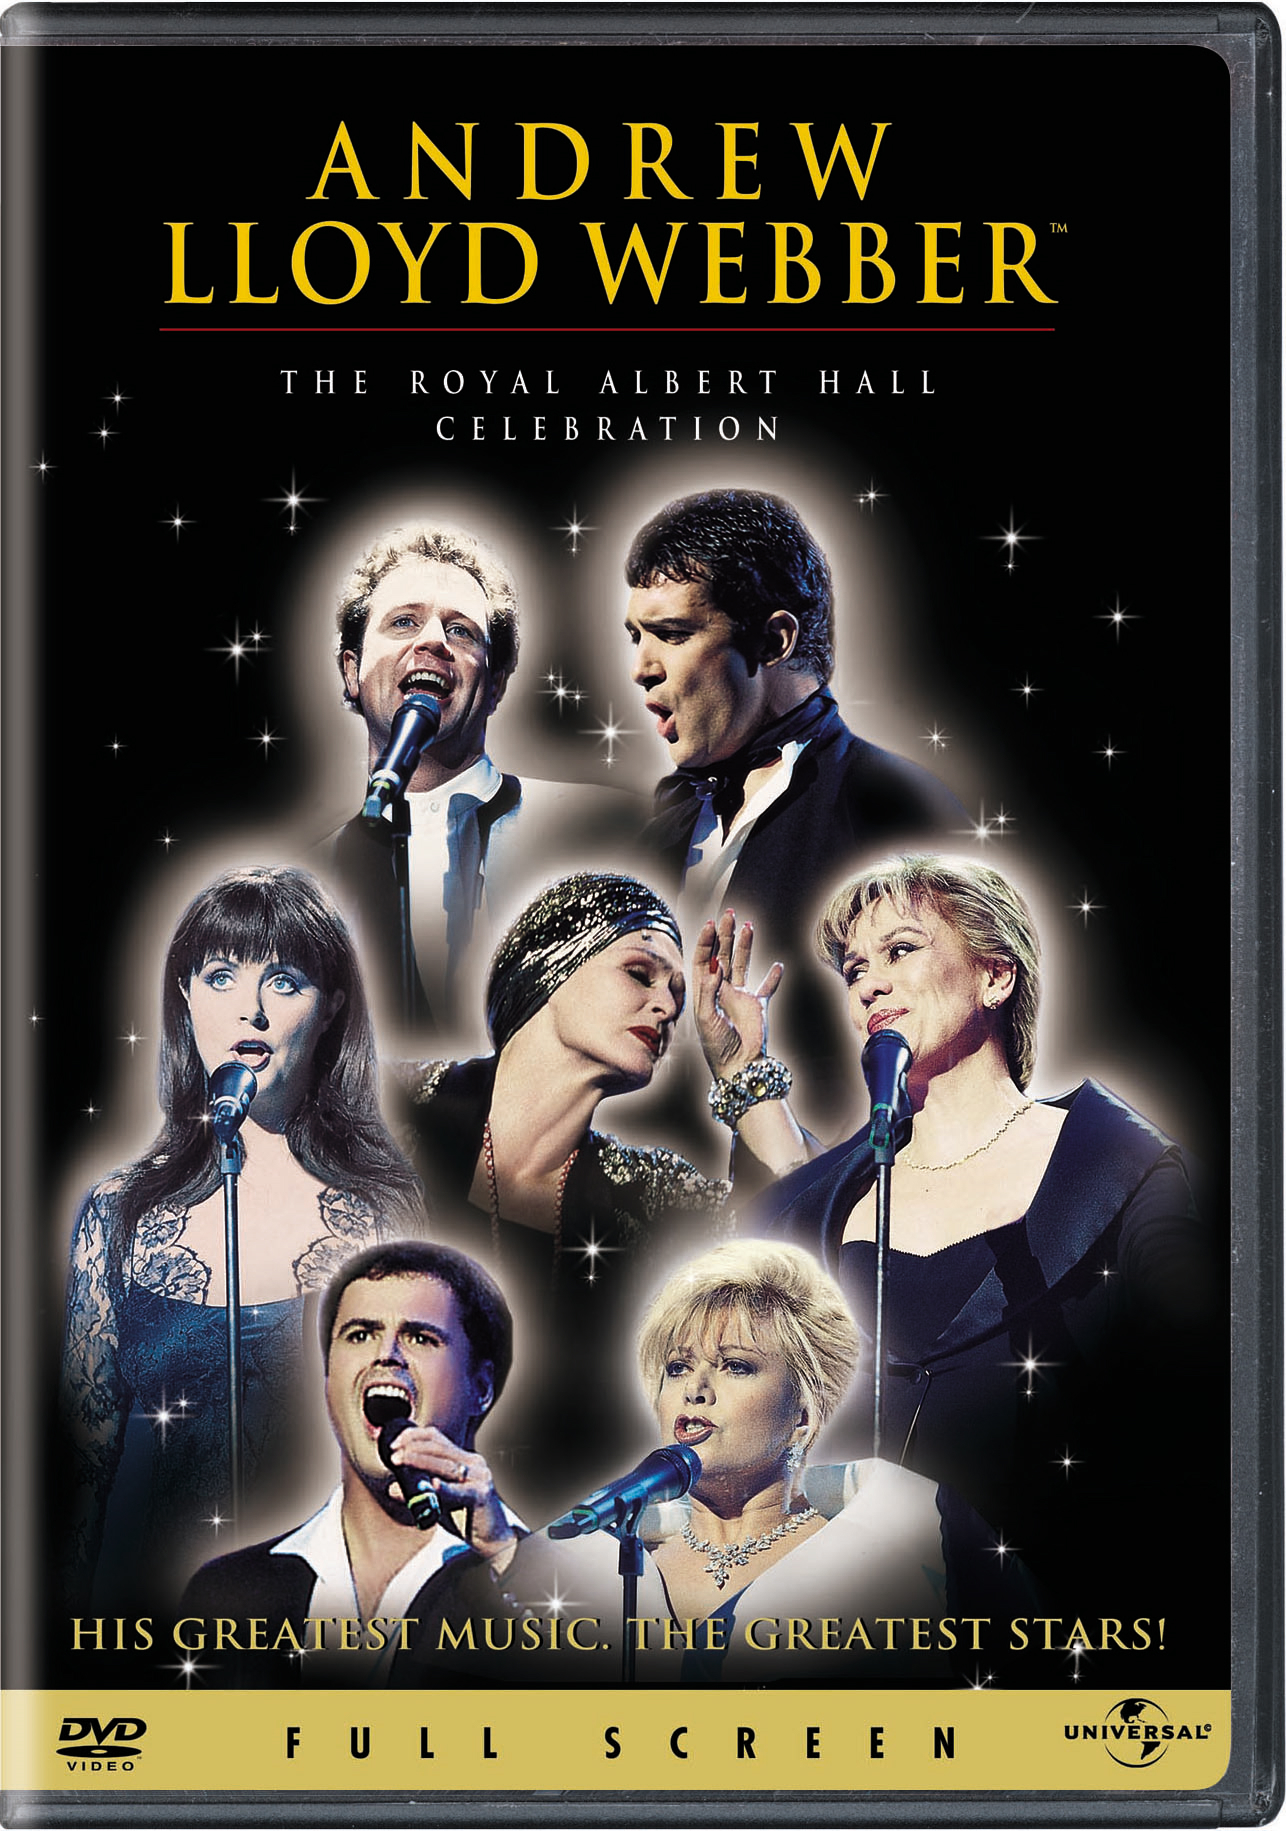 Andrew Lloyd Webber: The Royal Albert Hall Celebration - DVD [ 1998 ]  - Stage Musicals Music On DVD